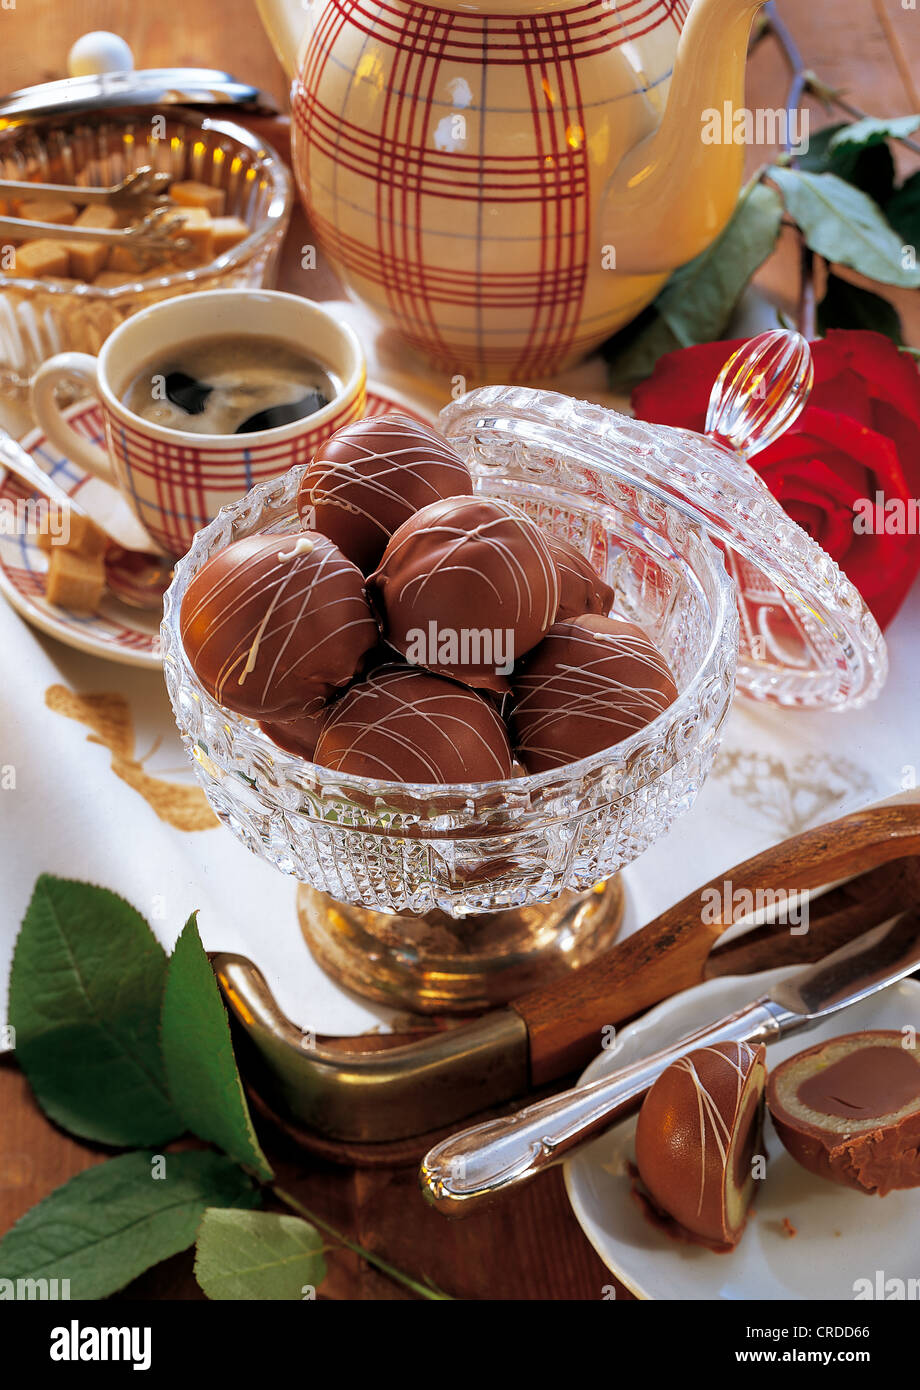 Salzburg Mozartkugeln chocolate balls, Austria Stock Photo - Alamy